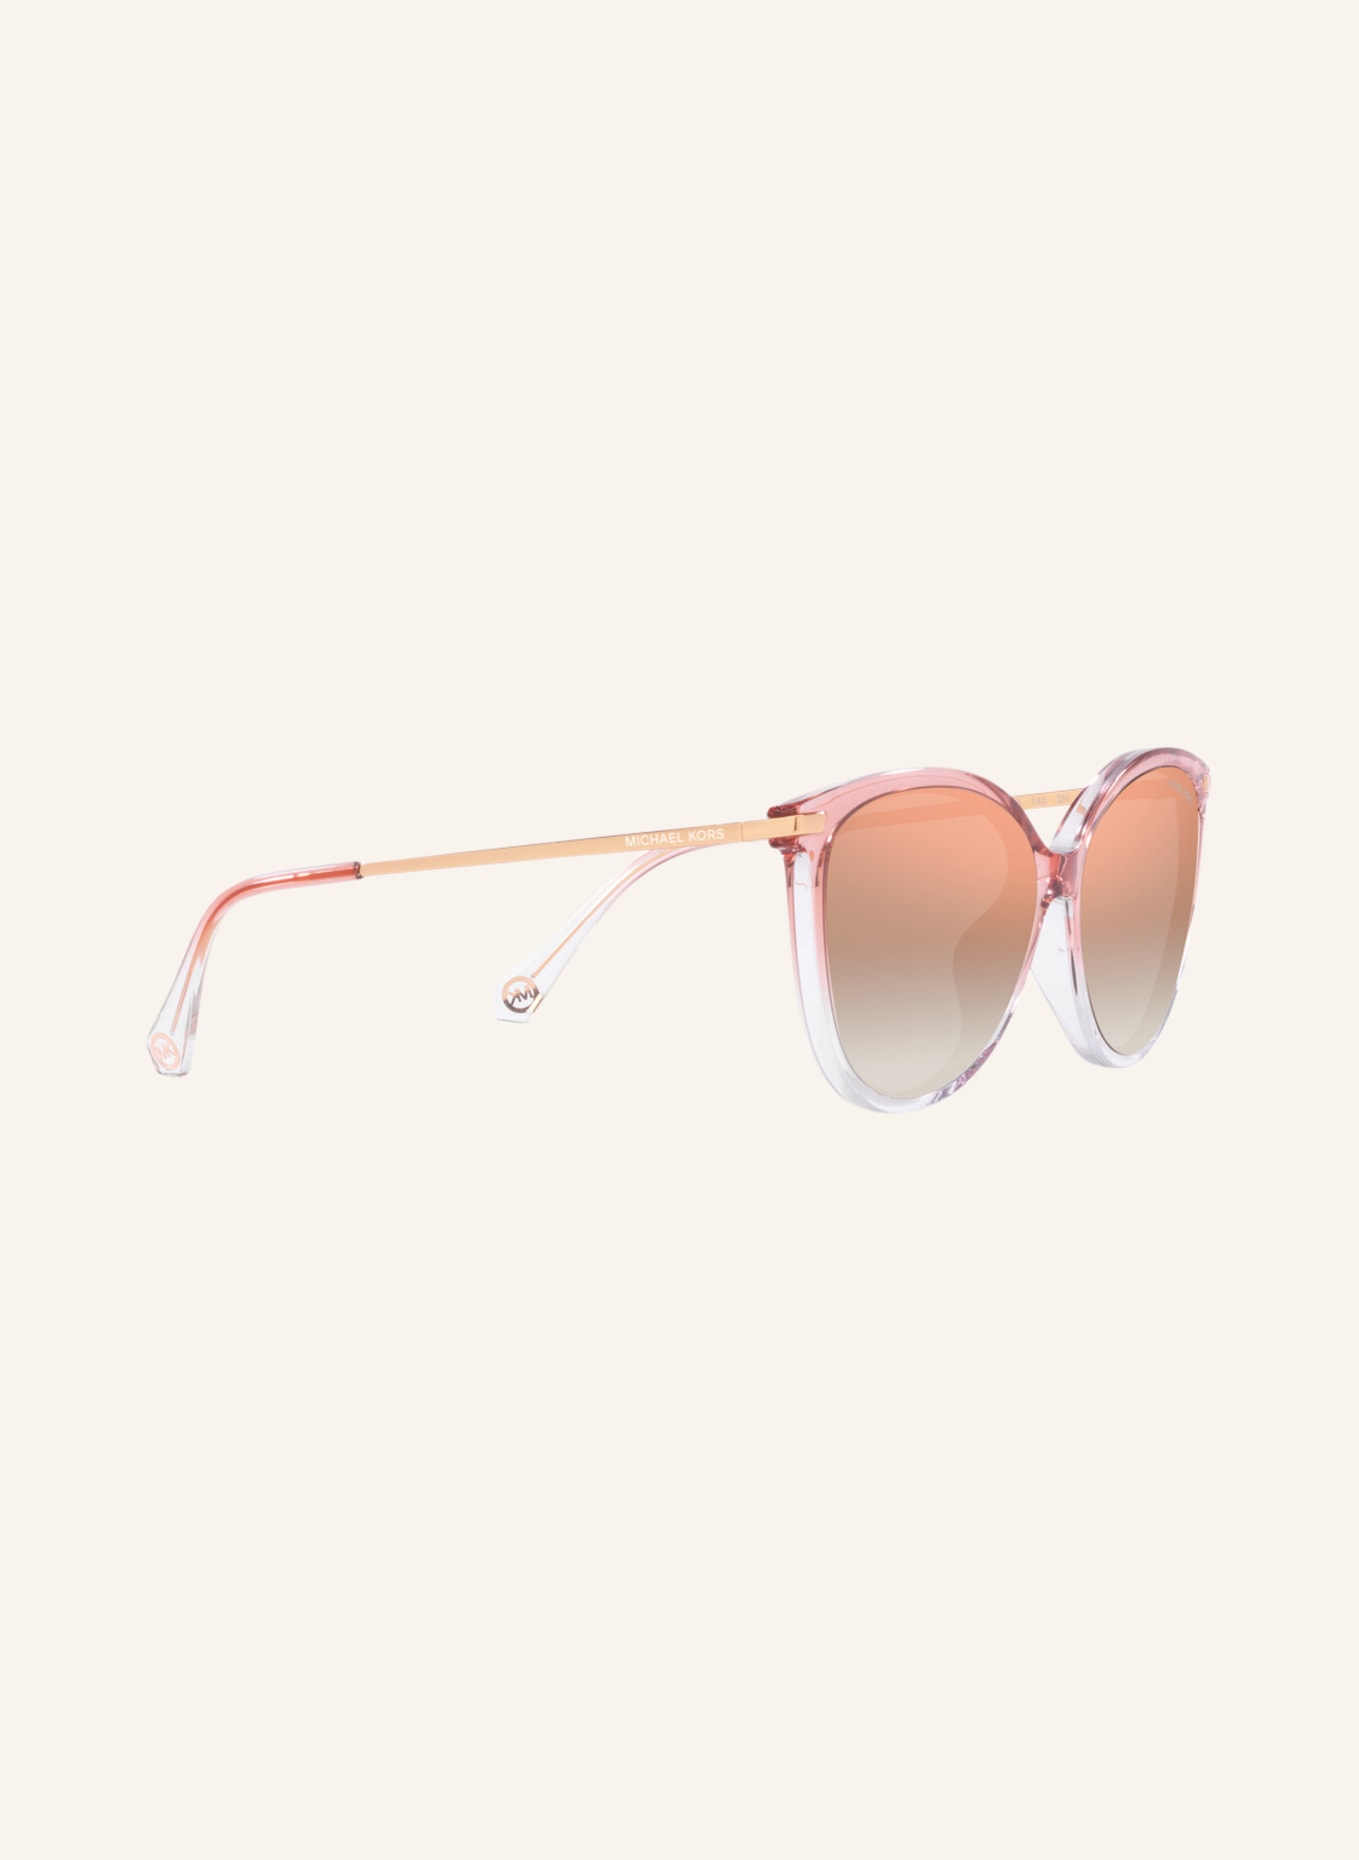 MICHAEL KORS Sonnenbrille MK2184, Farbe: 32556F - ROSA/ ROSA VERSPIEGELT (Bild 3)